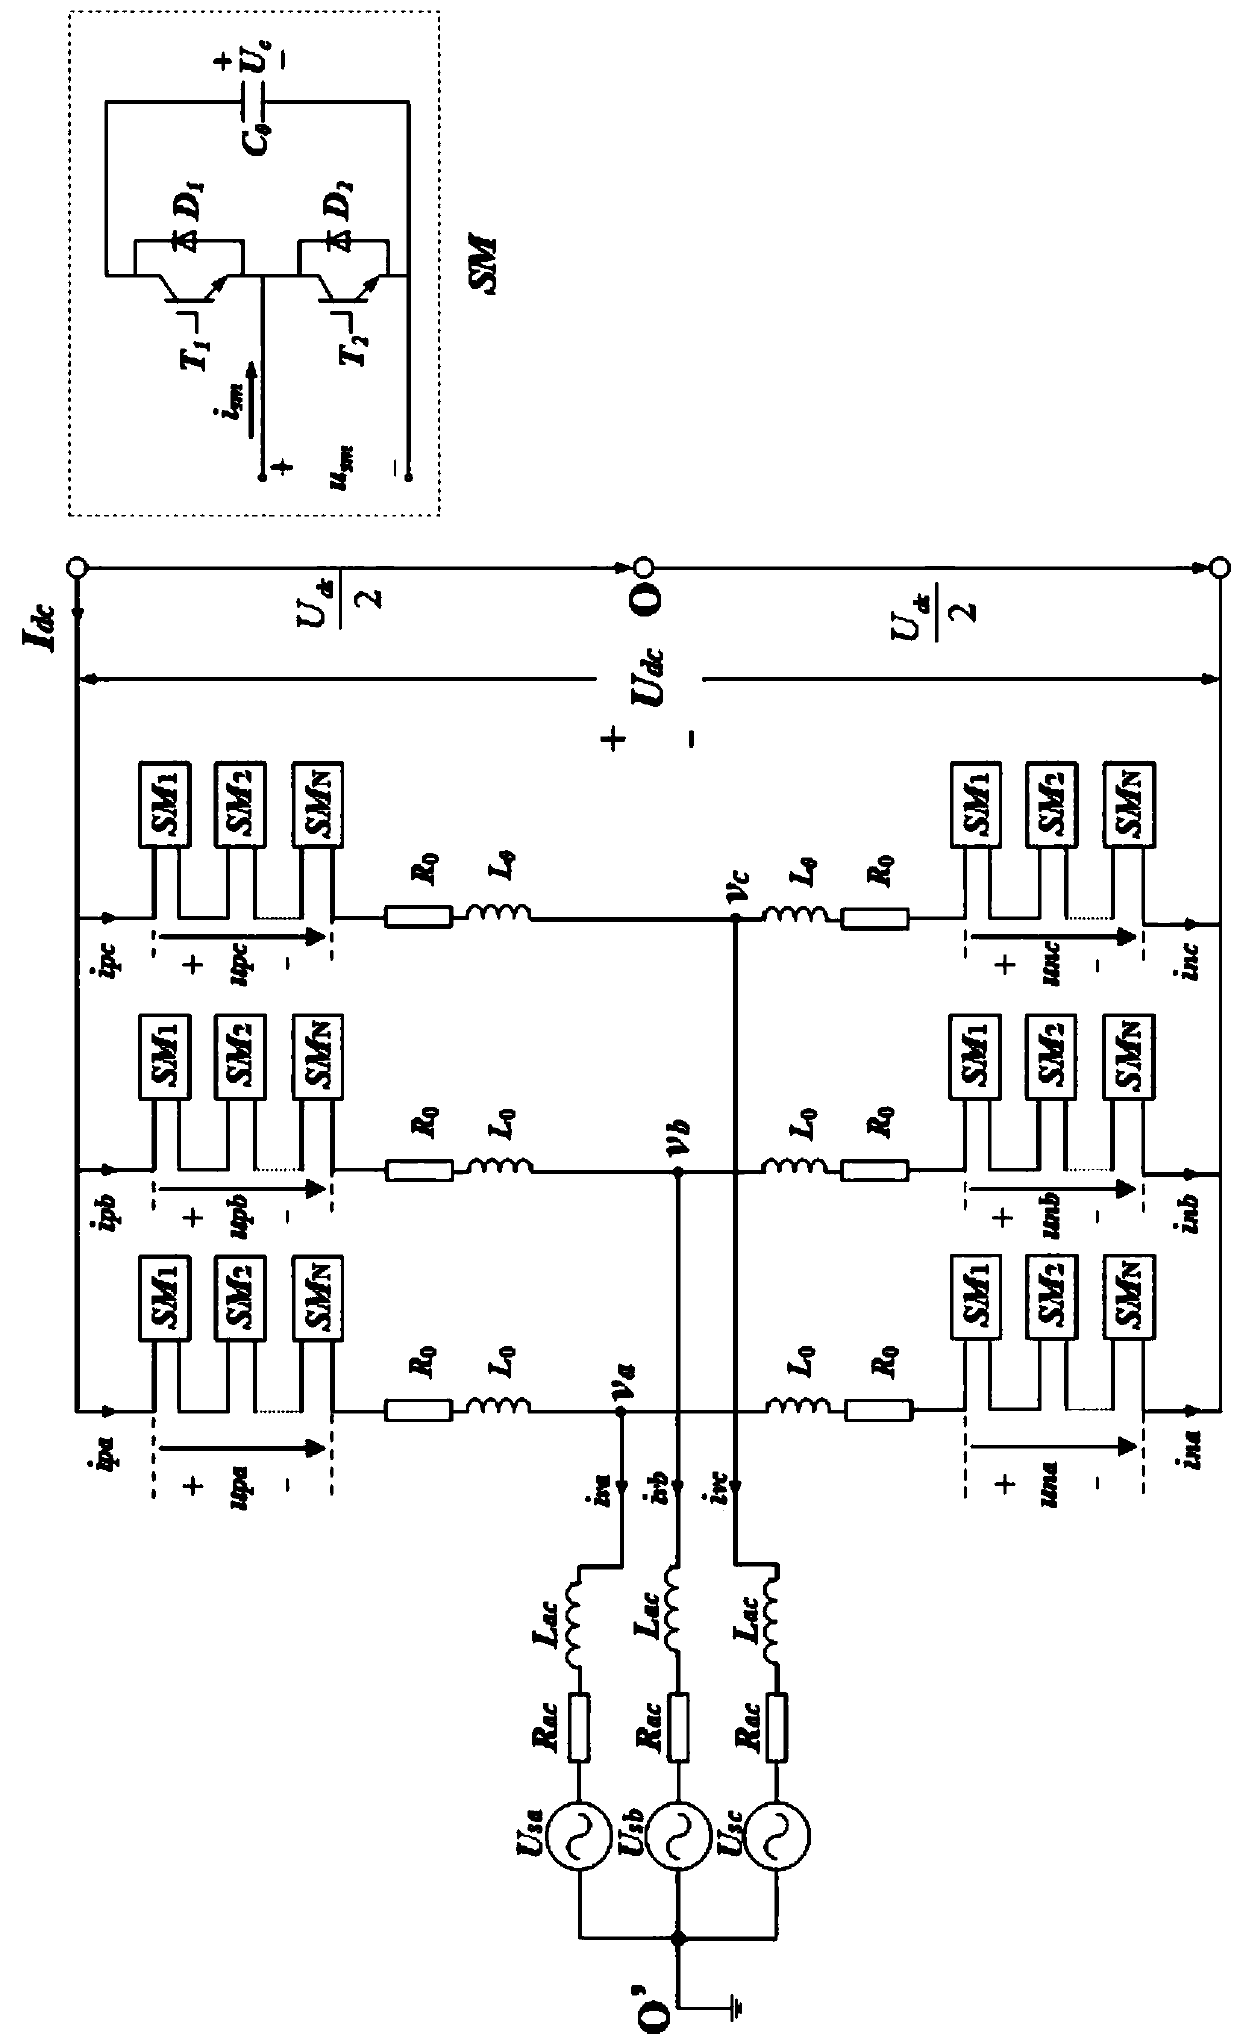 Method for designing MMC-HVDC controller